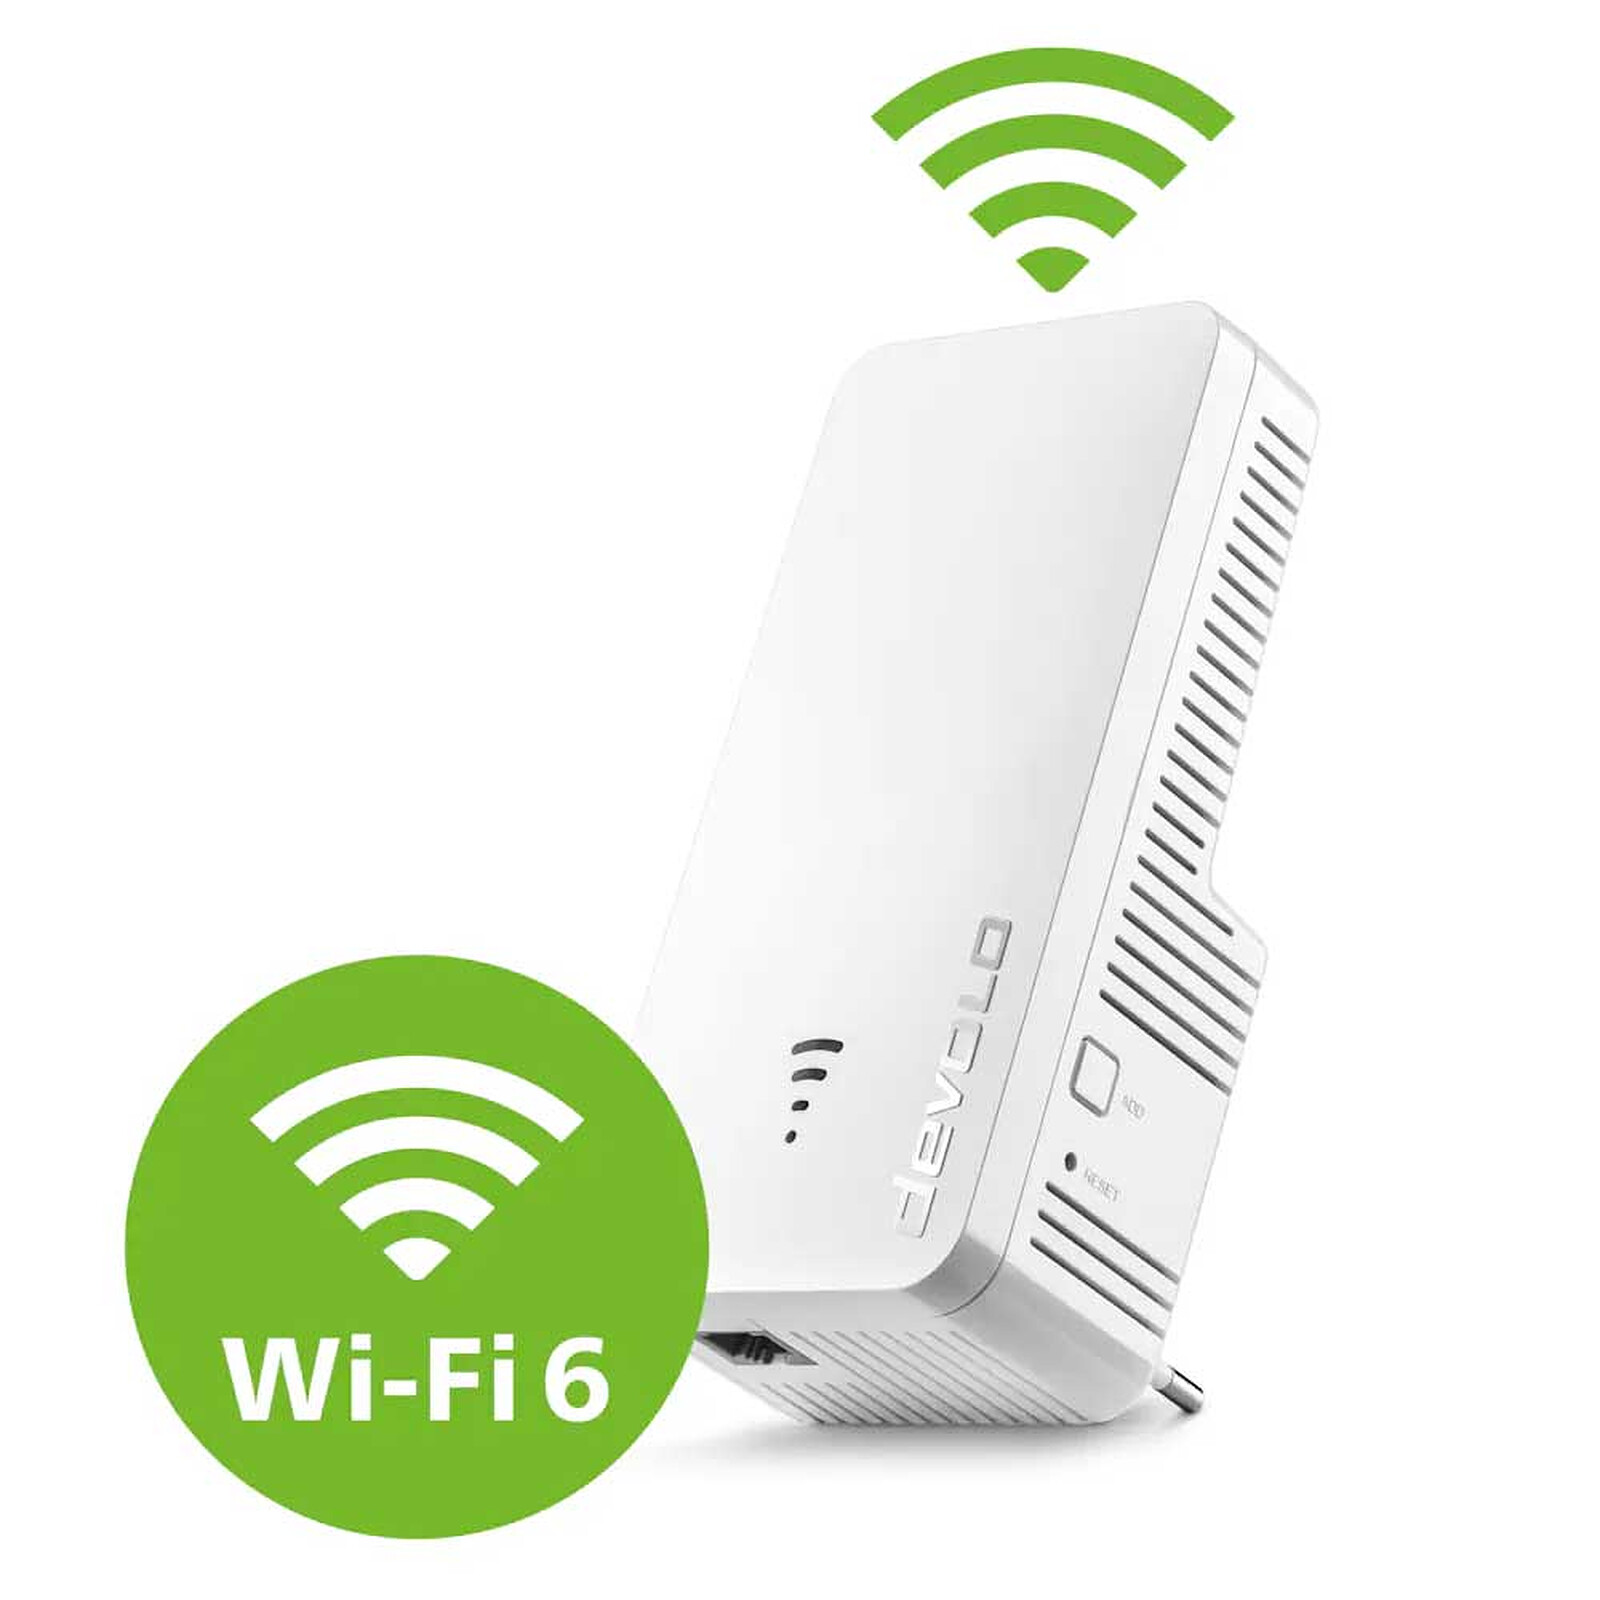 Devolo - WiFi 6 Repeater 5400 Repetidor de red 5400 Mbit/s Blanco